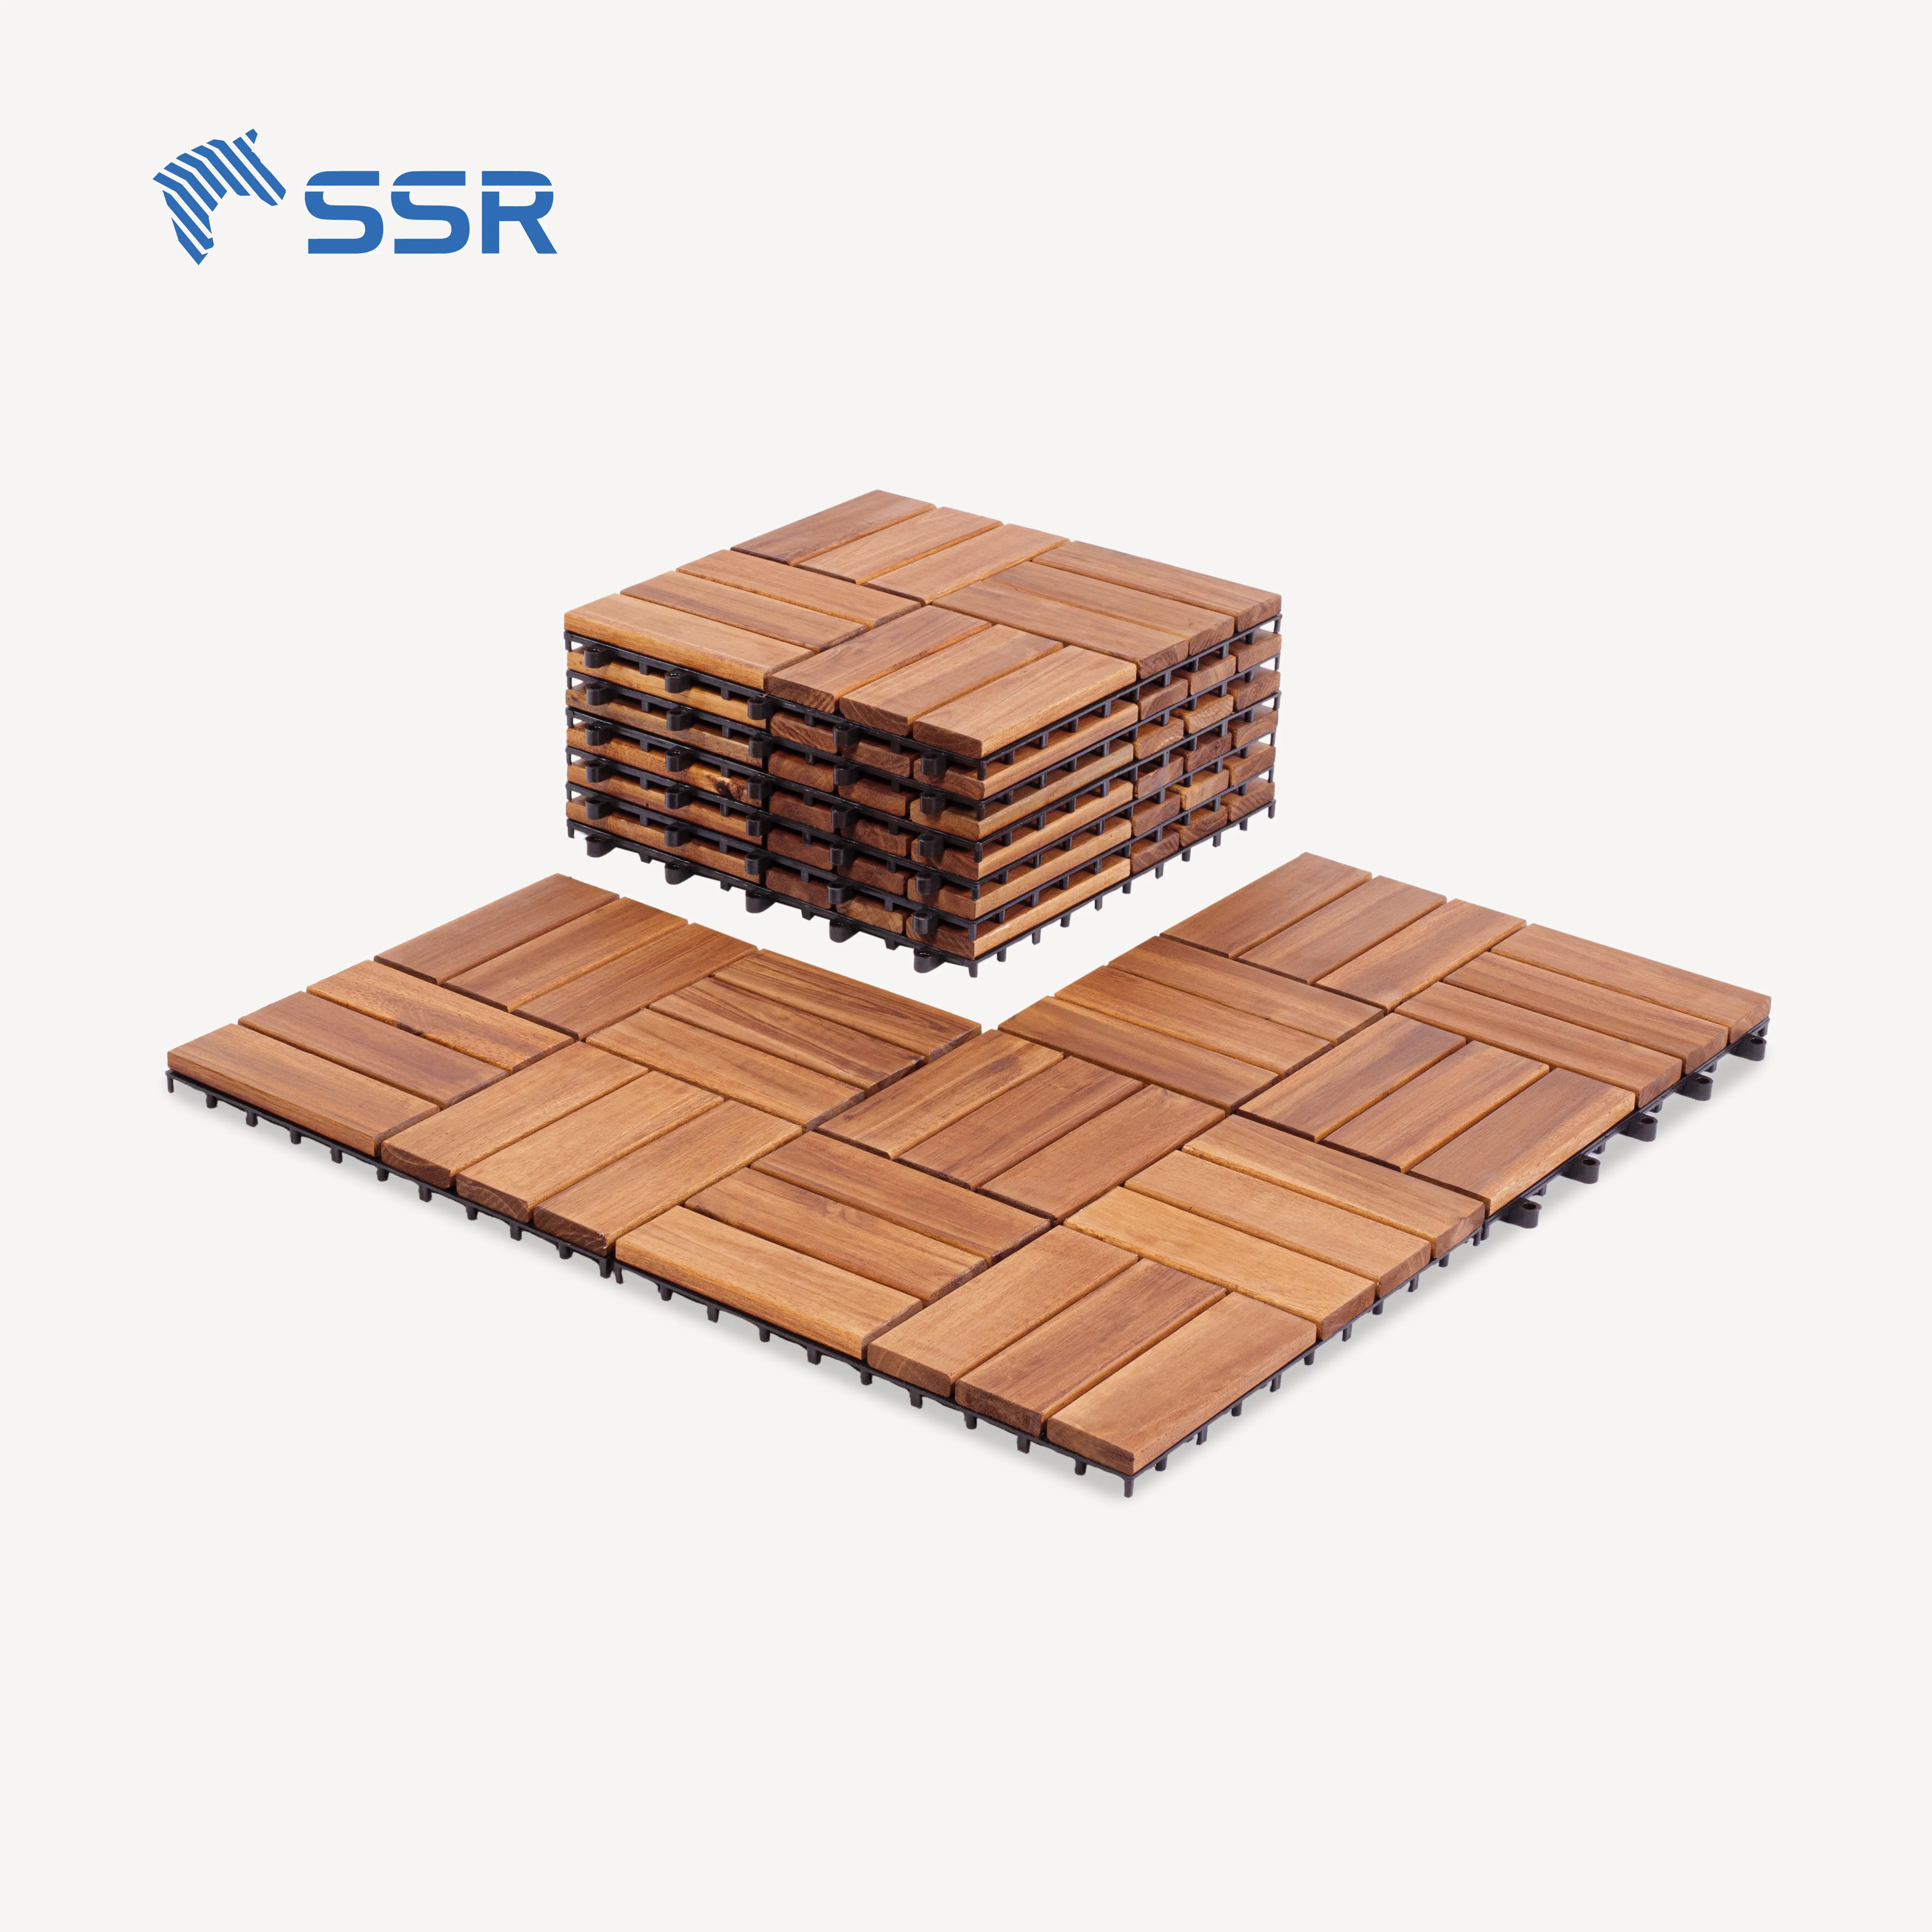 SSR VINA-아카시아 나무 데크 타일-베트남에서 만든 DIY 제품 바닥 타일 야외 데크 타일